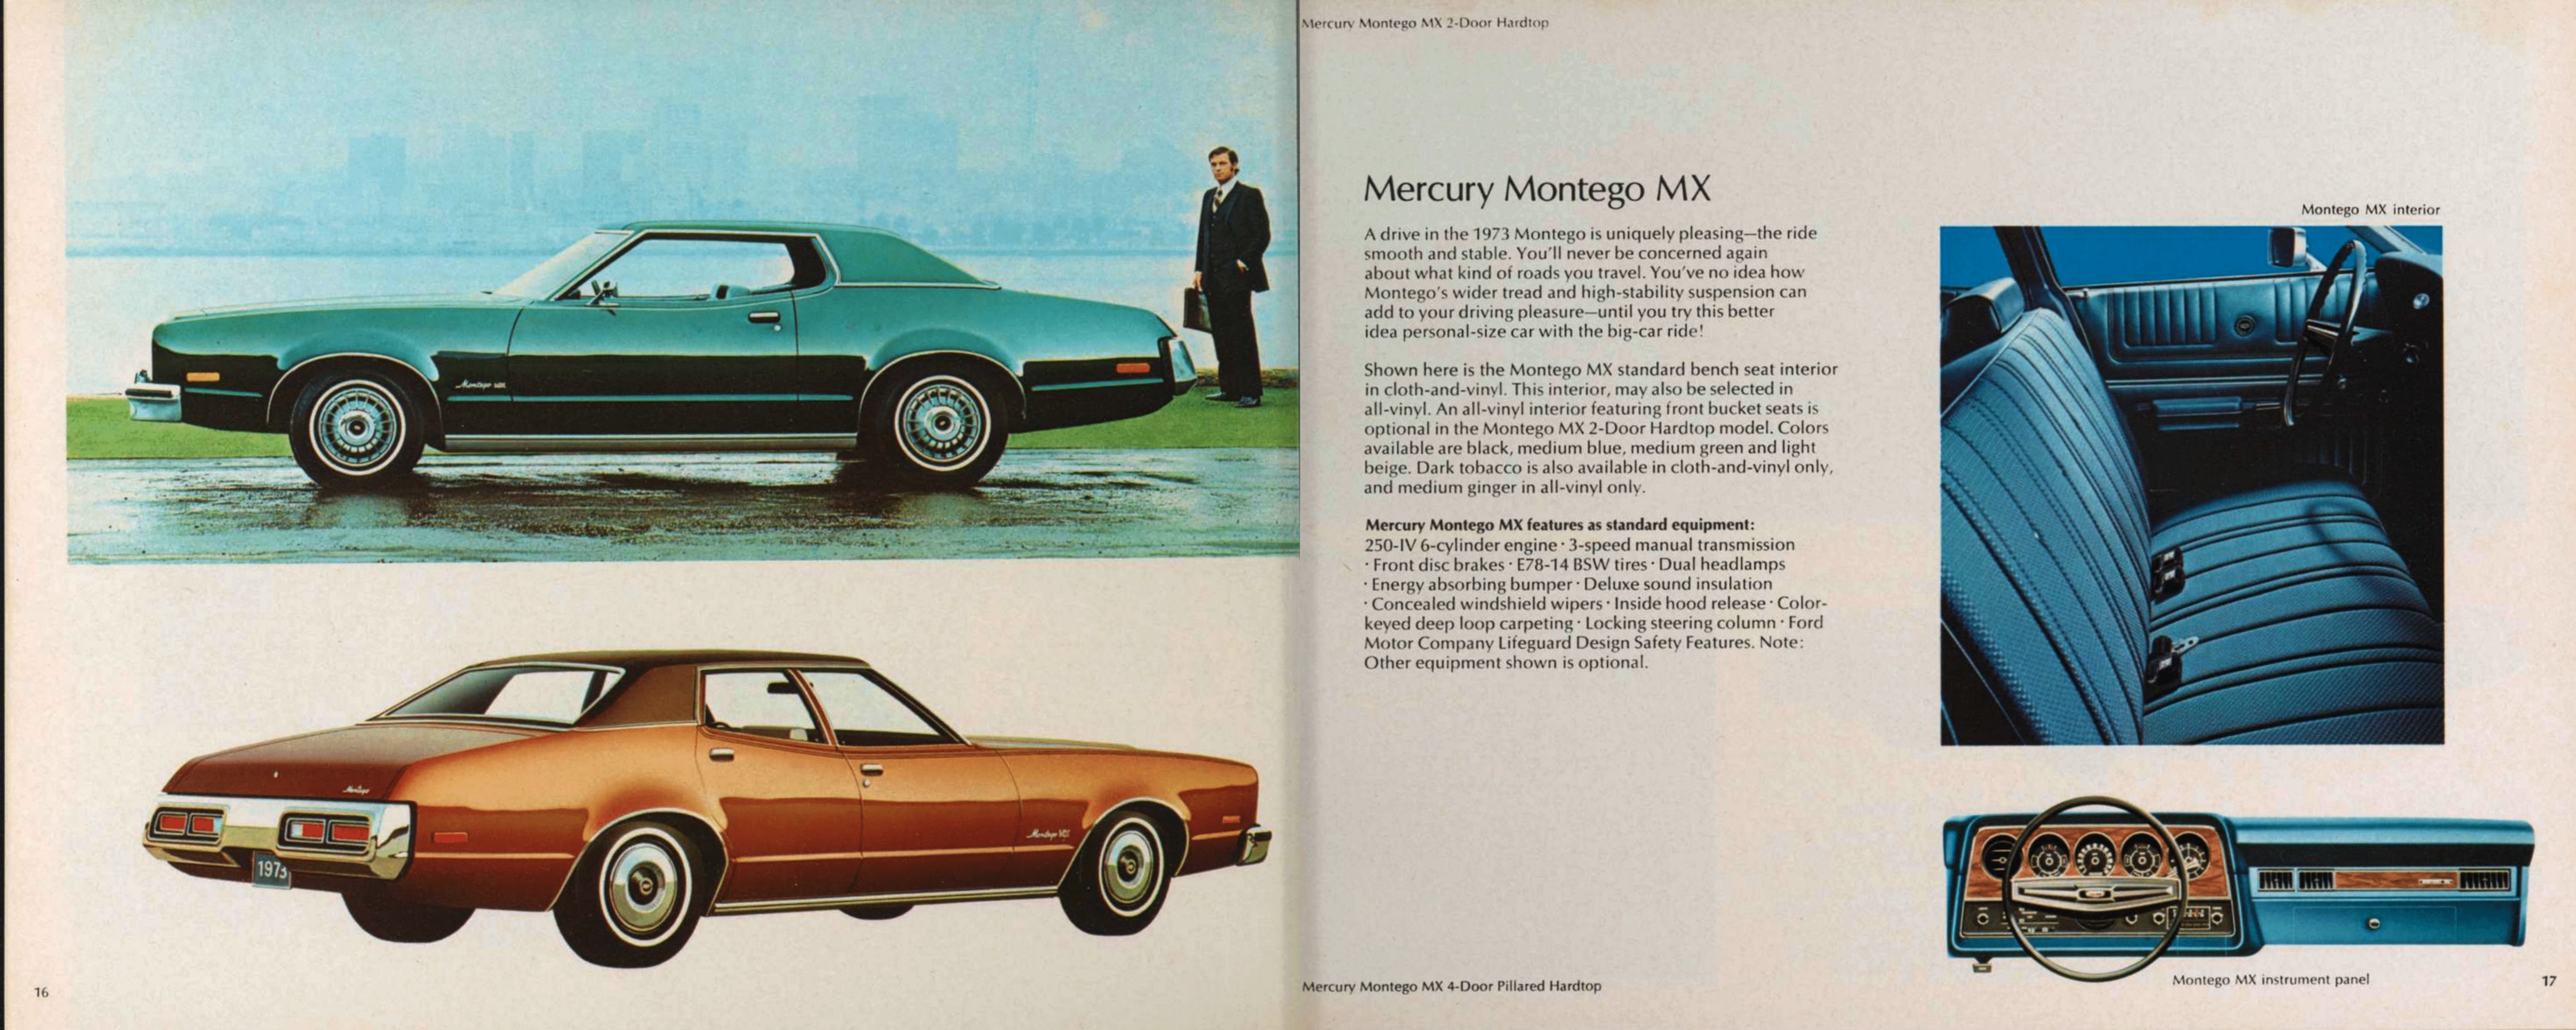 1973 Lincoln Mercury Full Line Brochure 16-17